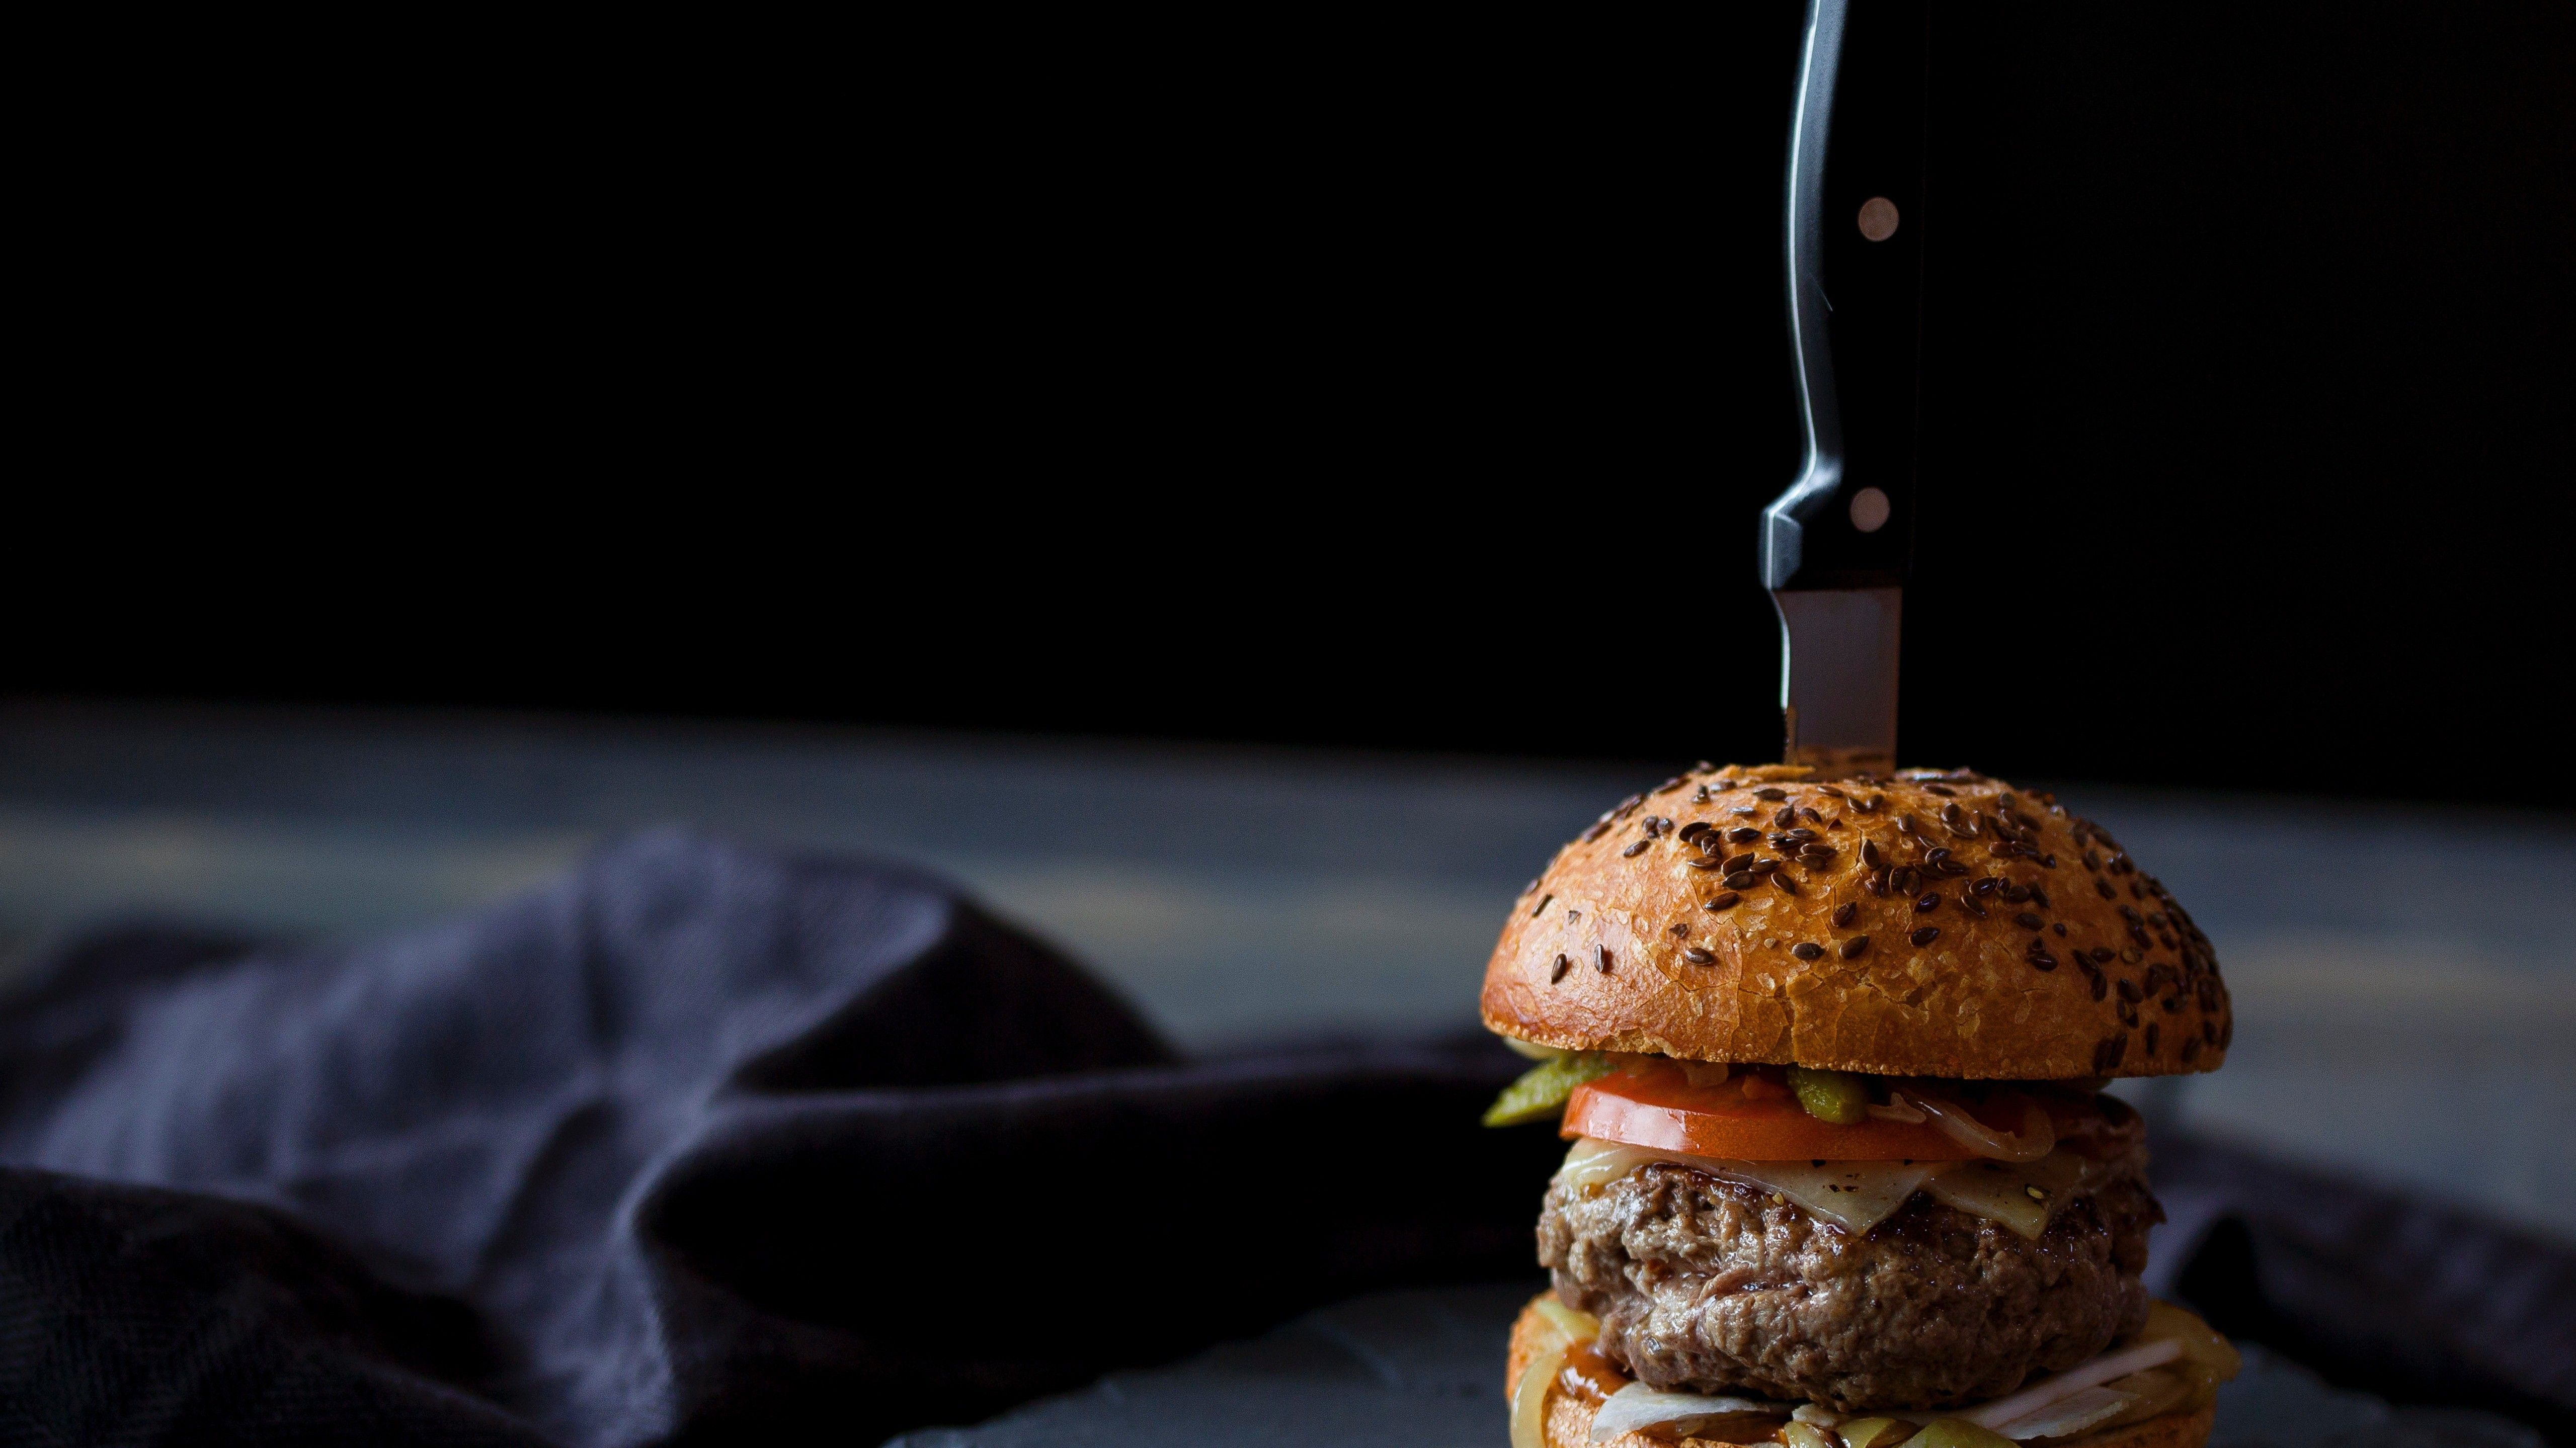 Non Veg Burger And Knife 5k Image Background Boar Westminster Restaurant London